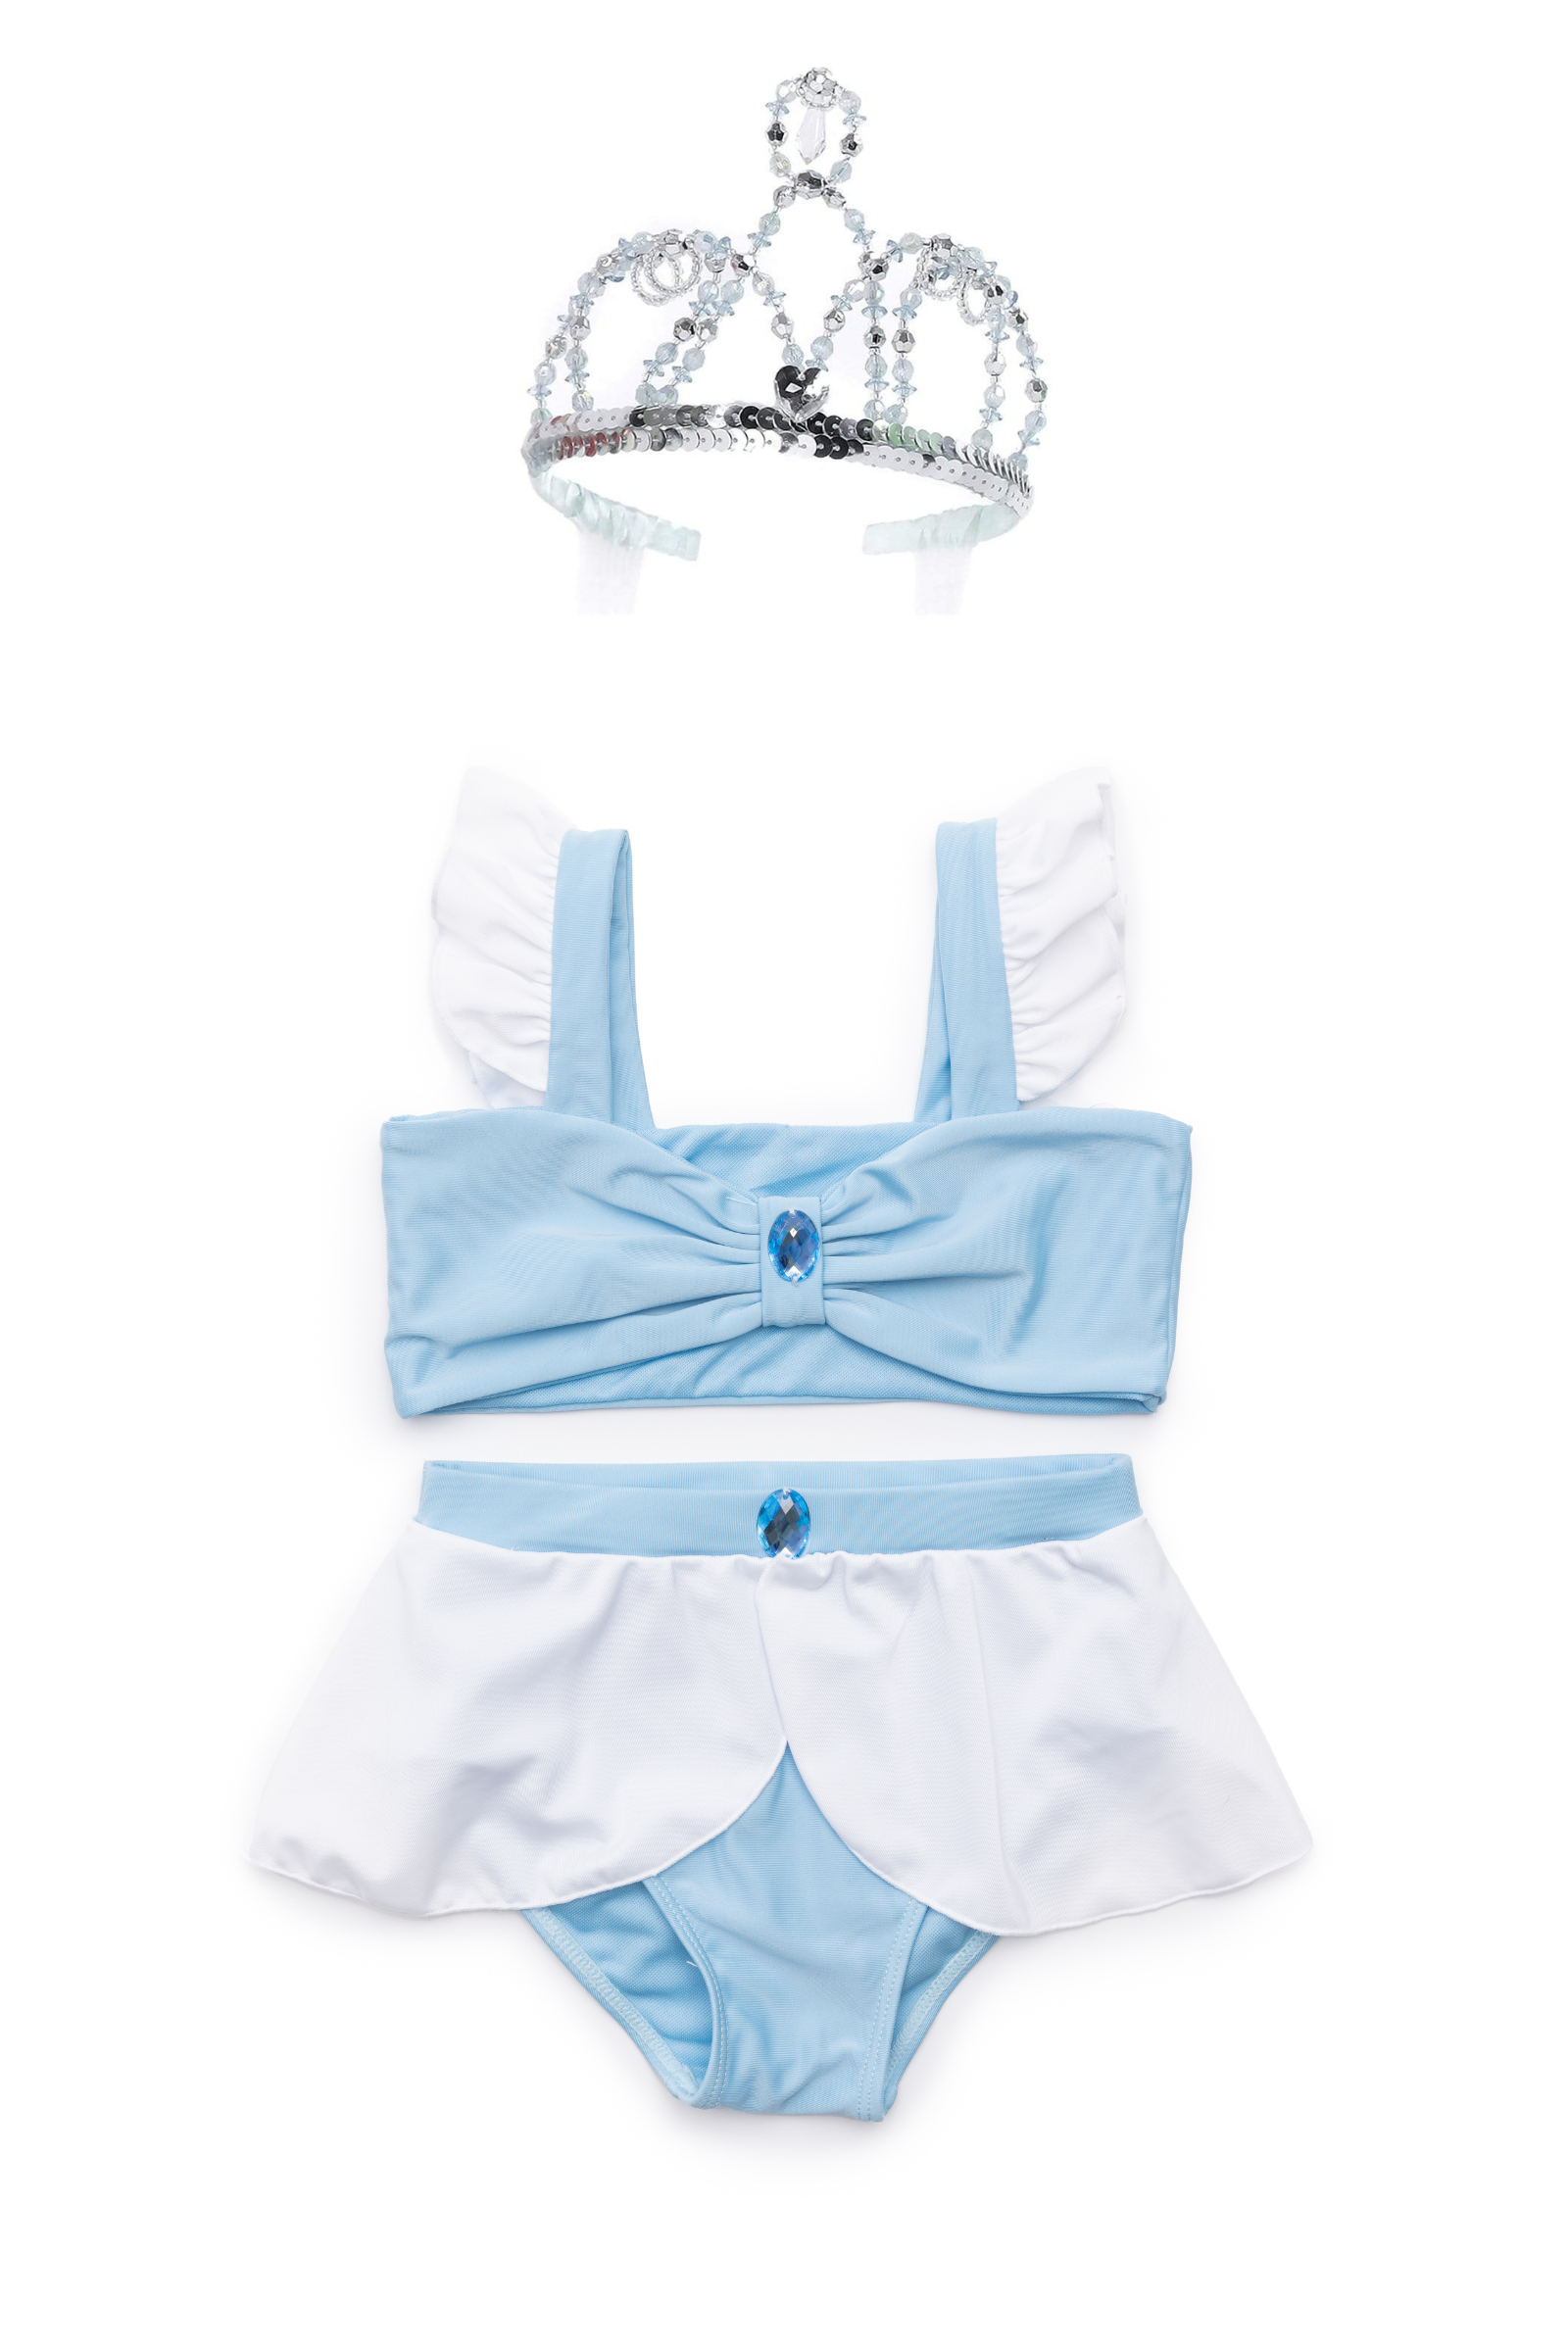 Cinderella Swim Suit & Tiara Bundle